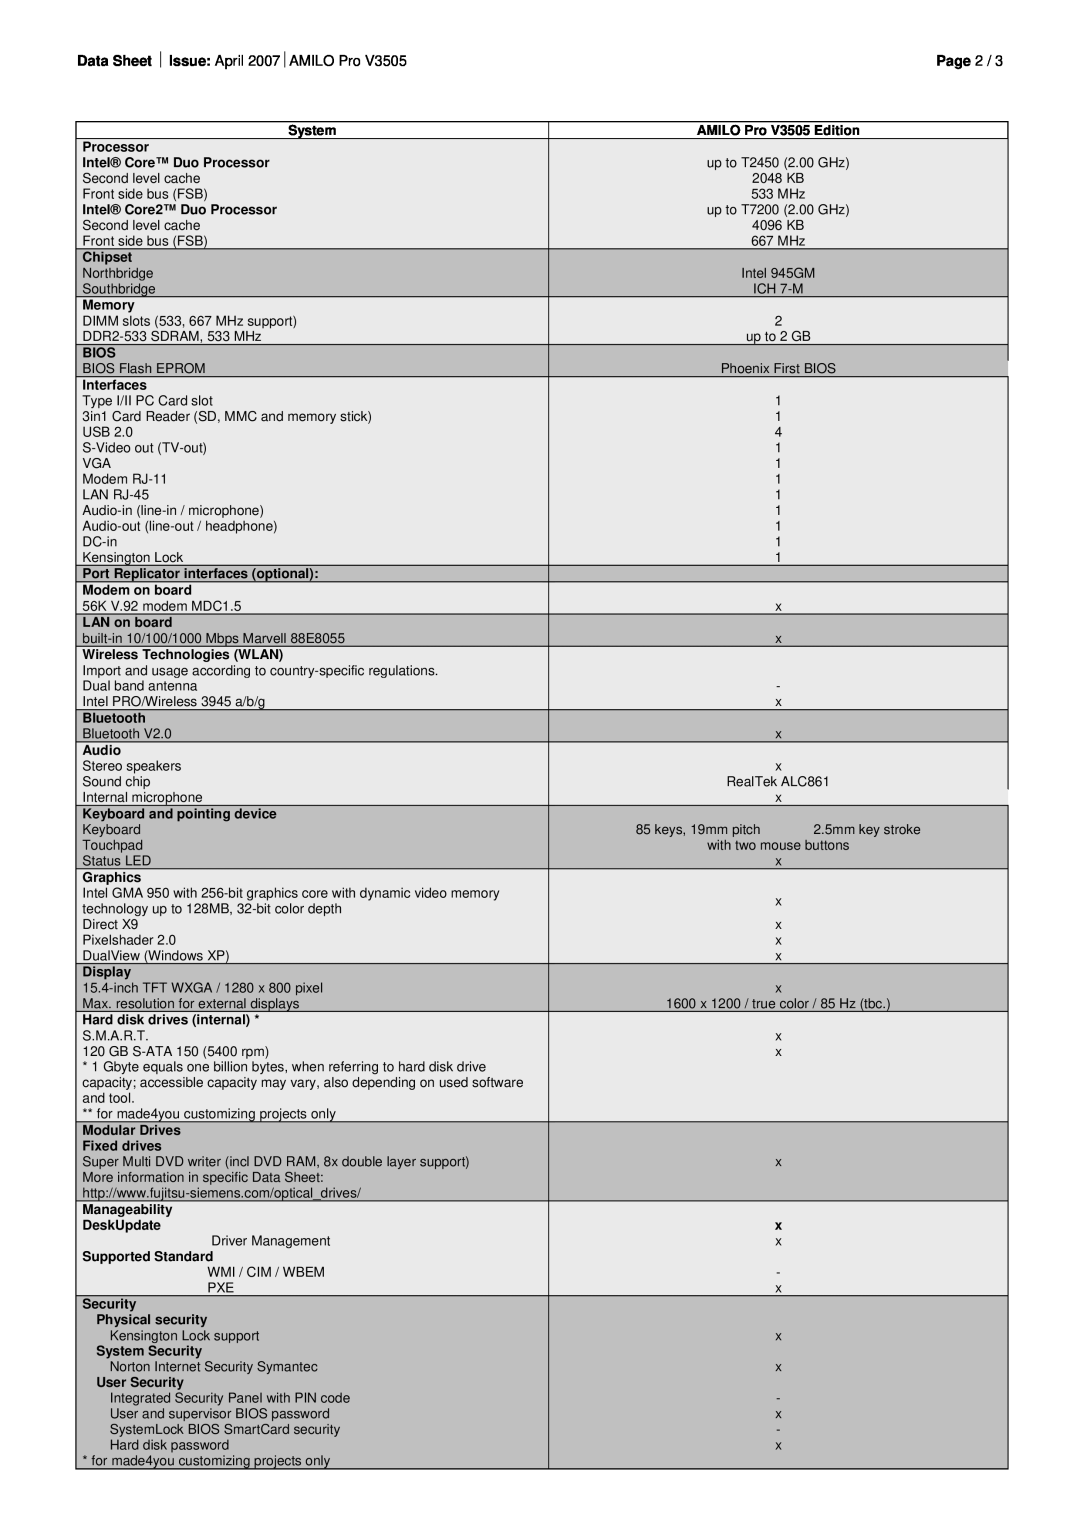 Fujitsu V3505 manual Data Sheet Issue April 2007AMILO Pro, Page 2 